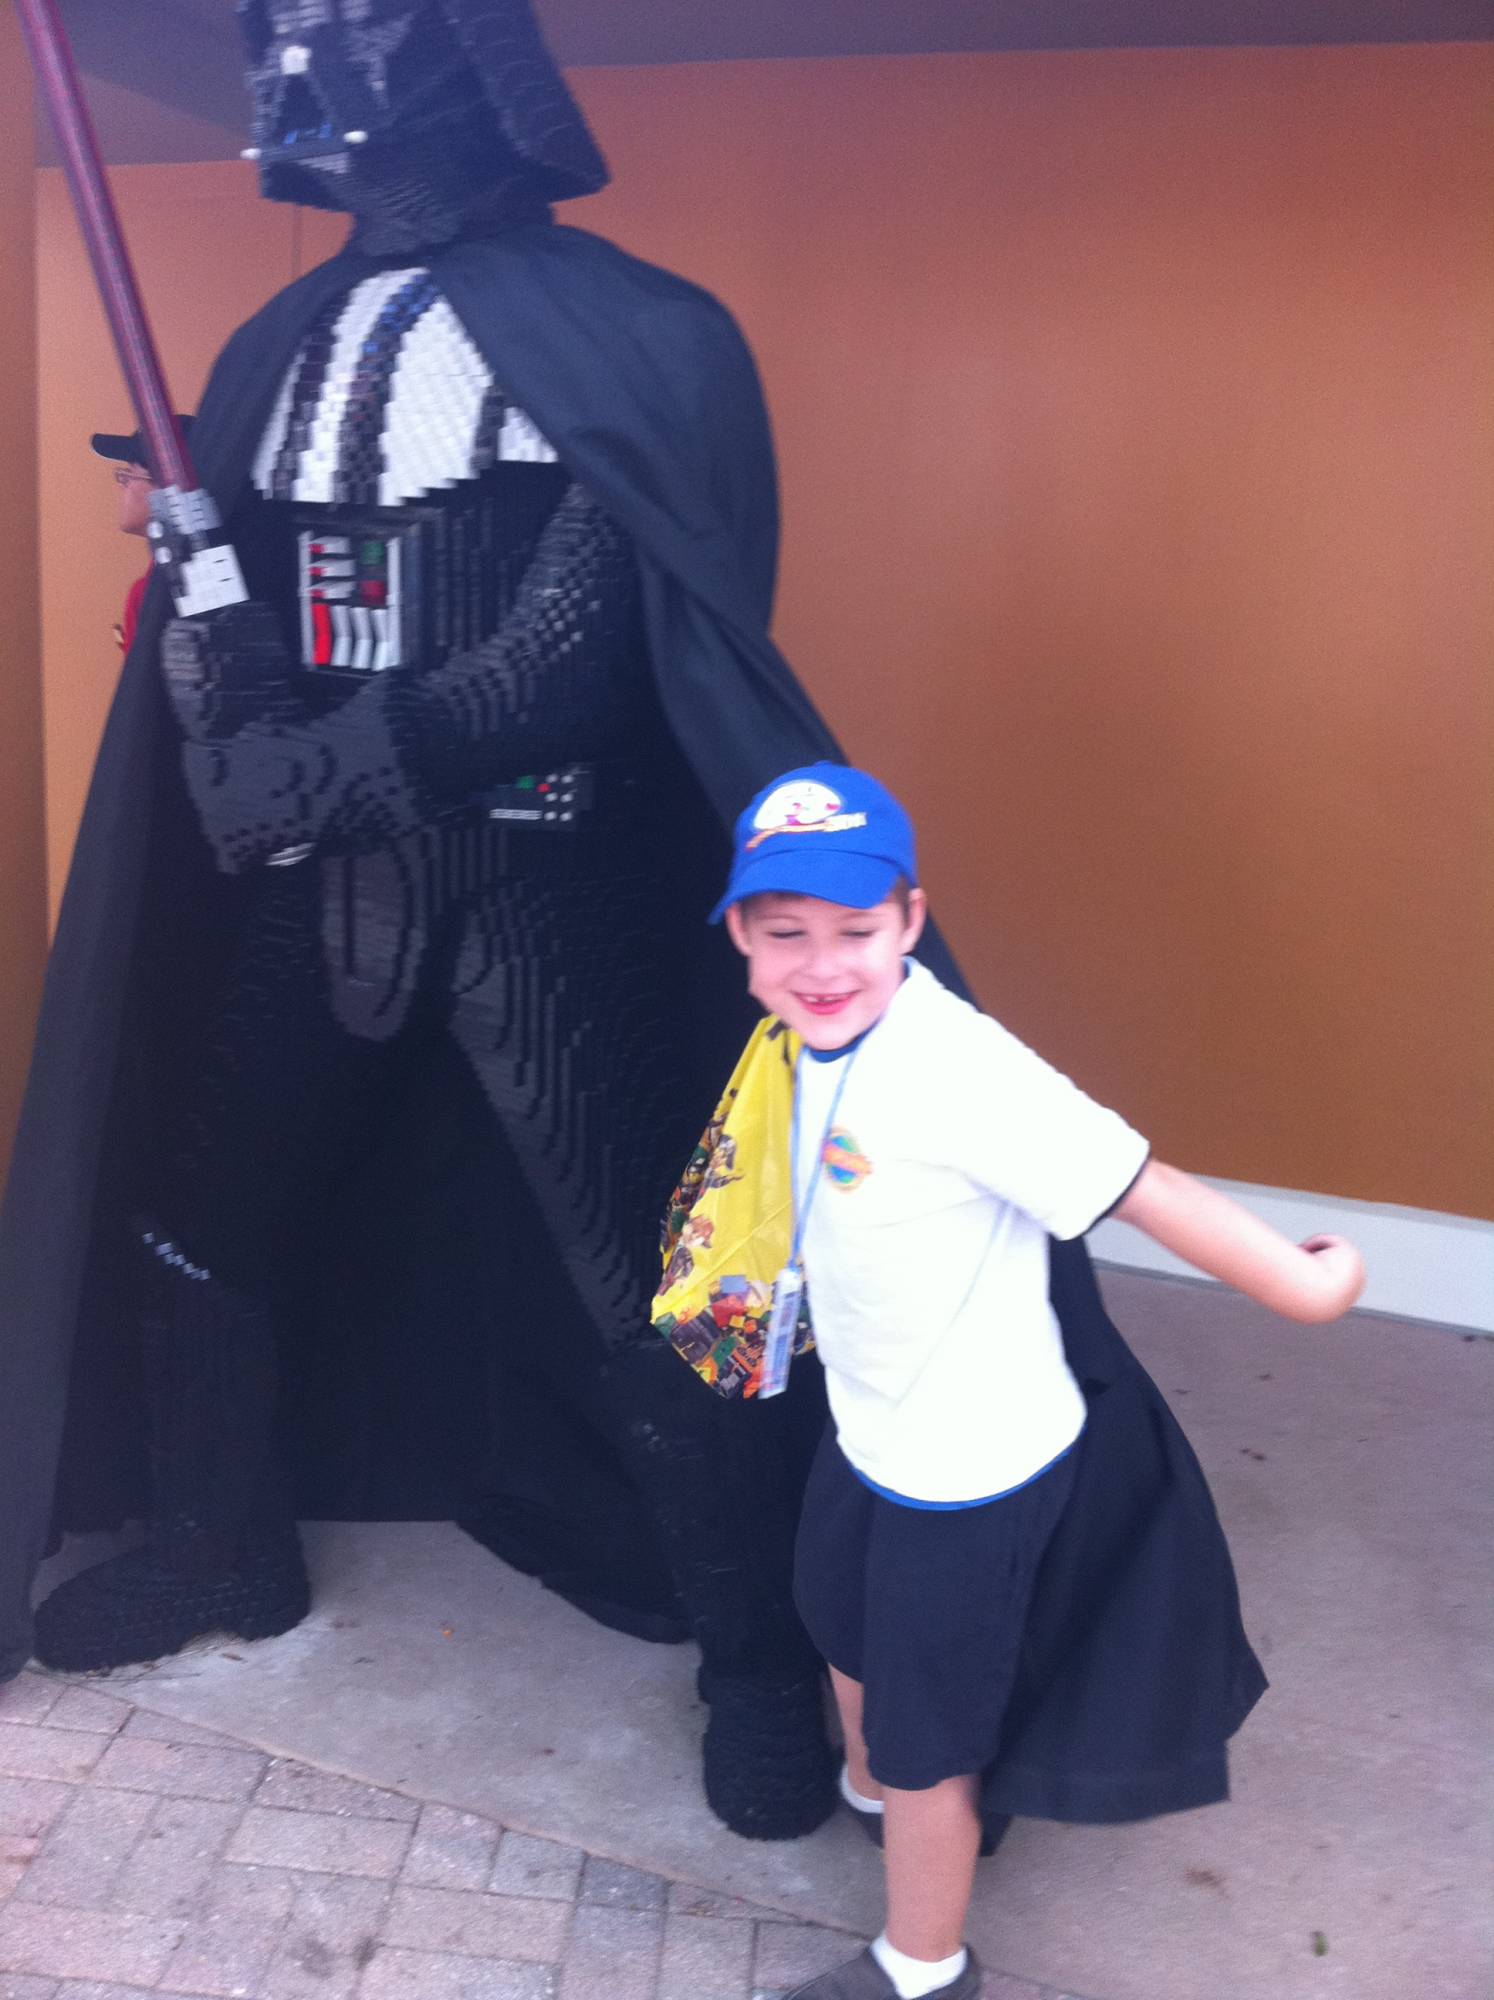 Darth Vader at LEGOLAND Florida